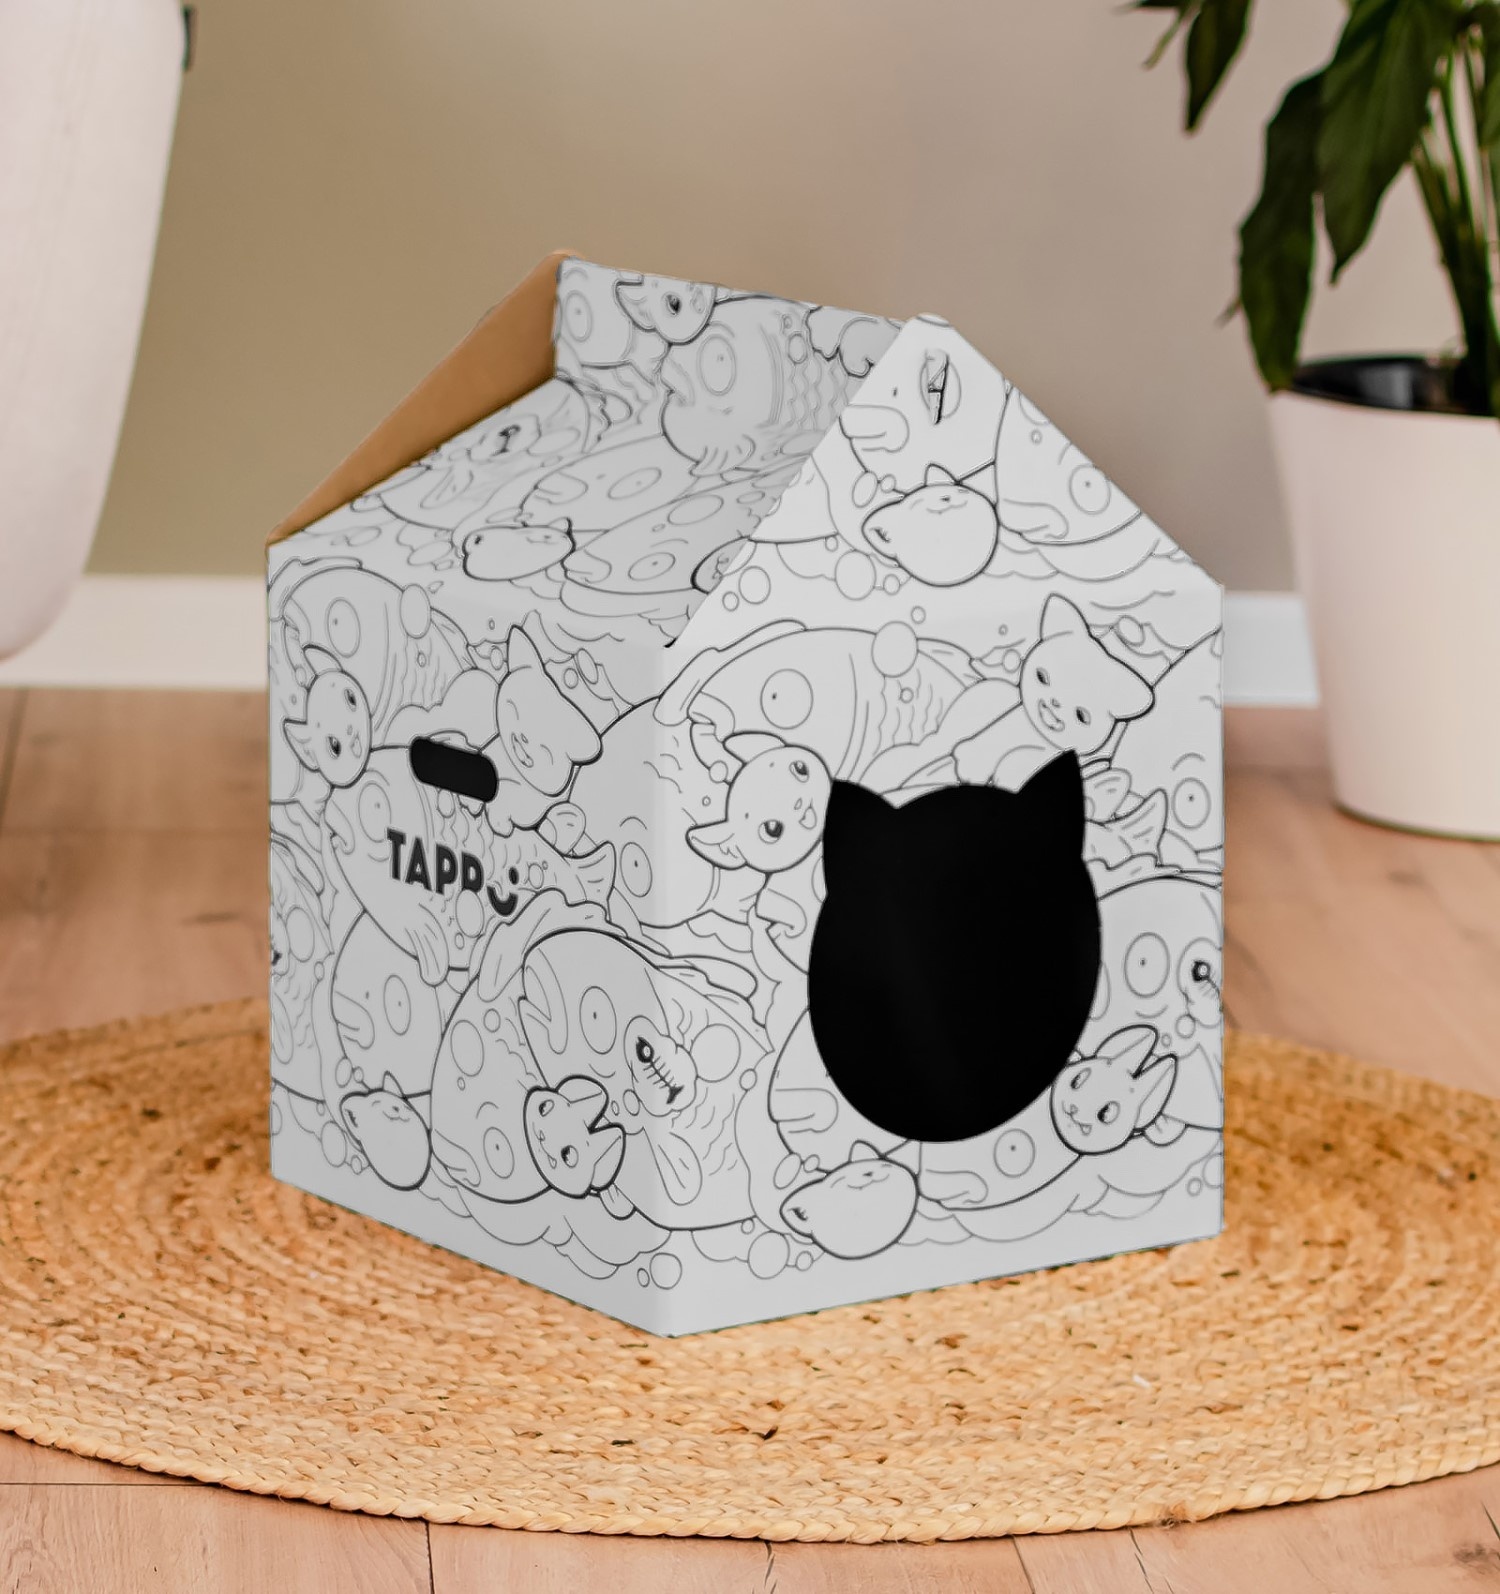 Tappi когтеточки Tappi когтеточки картонный домик для животных Бакэнэко (360 г) фото